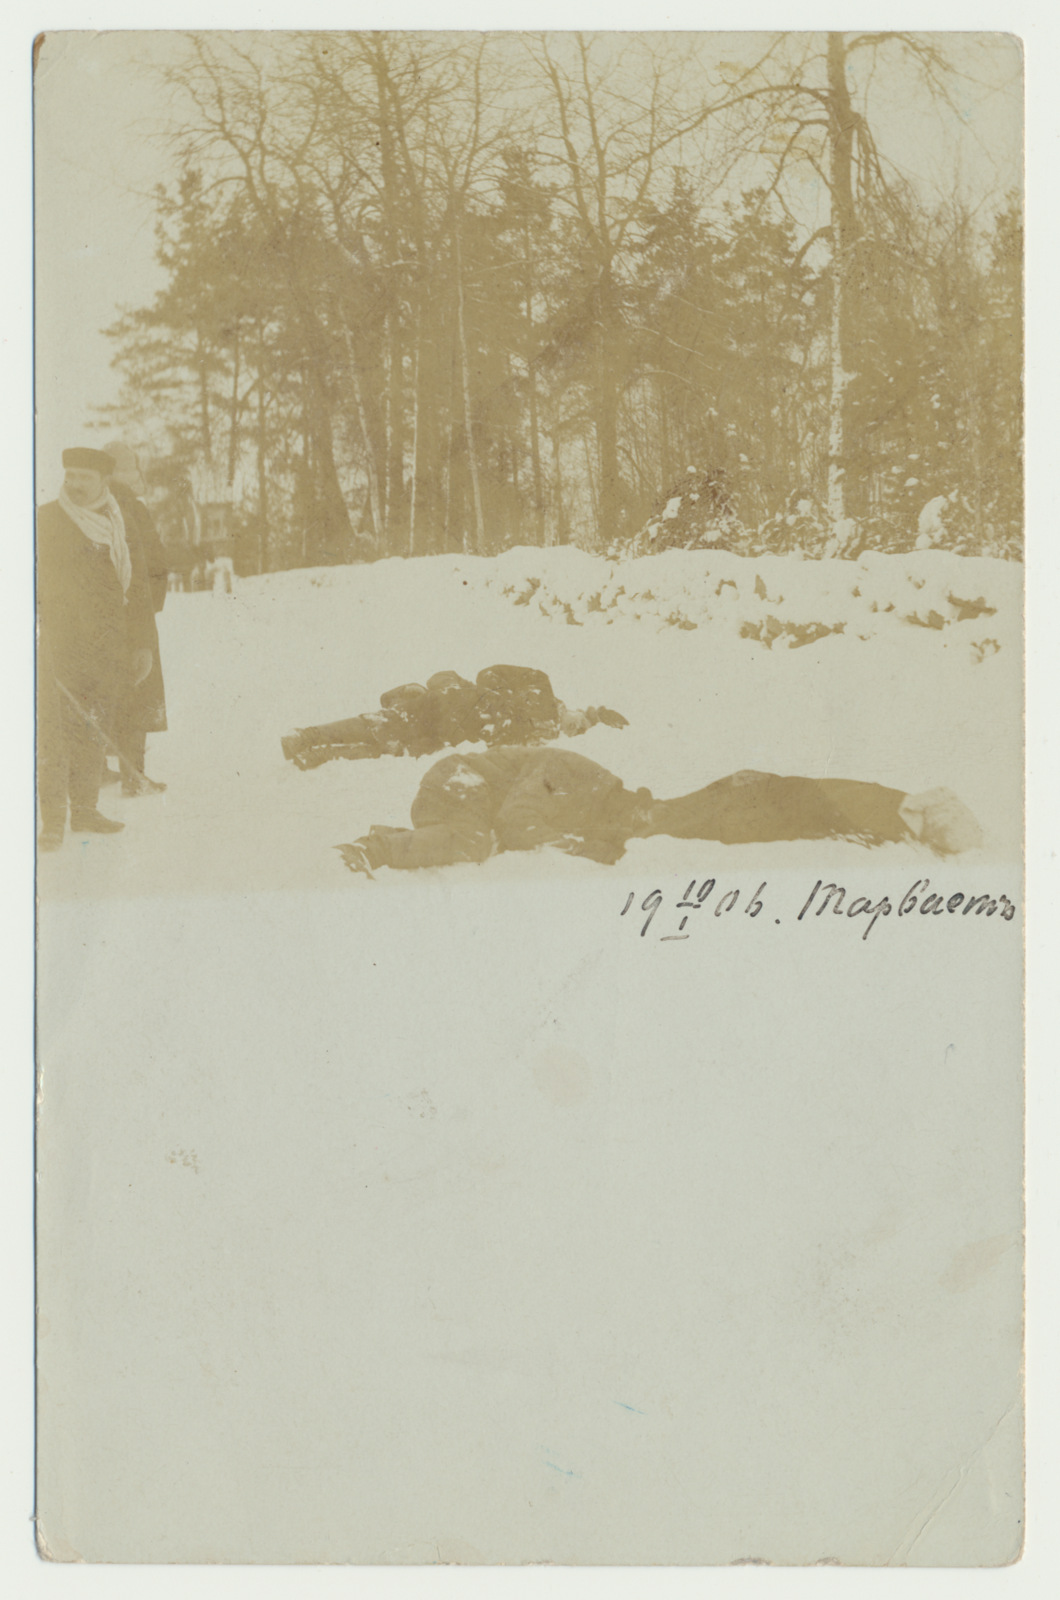 foto 1905.a. ohvrid Tarvastus